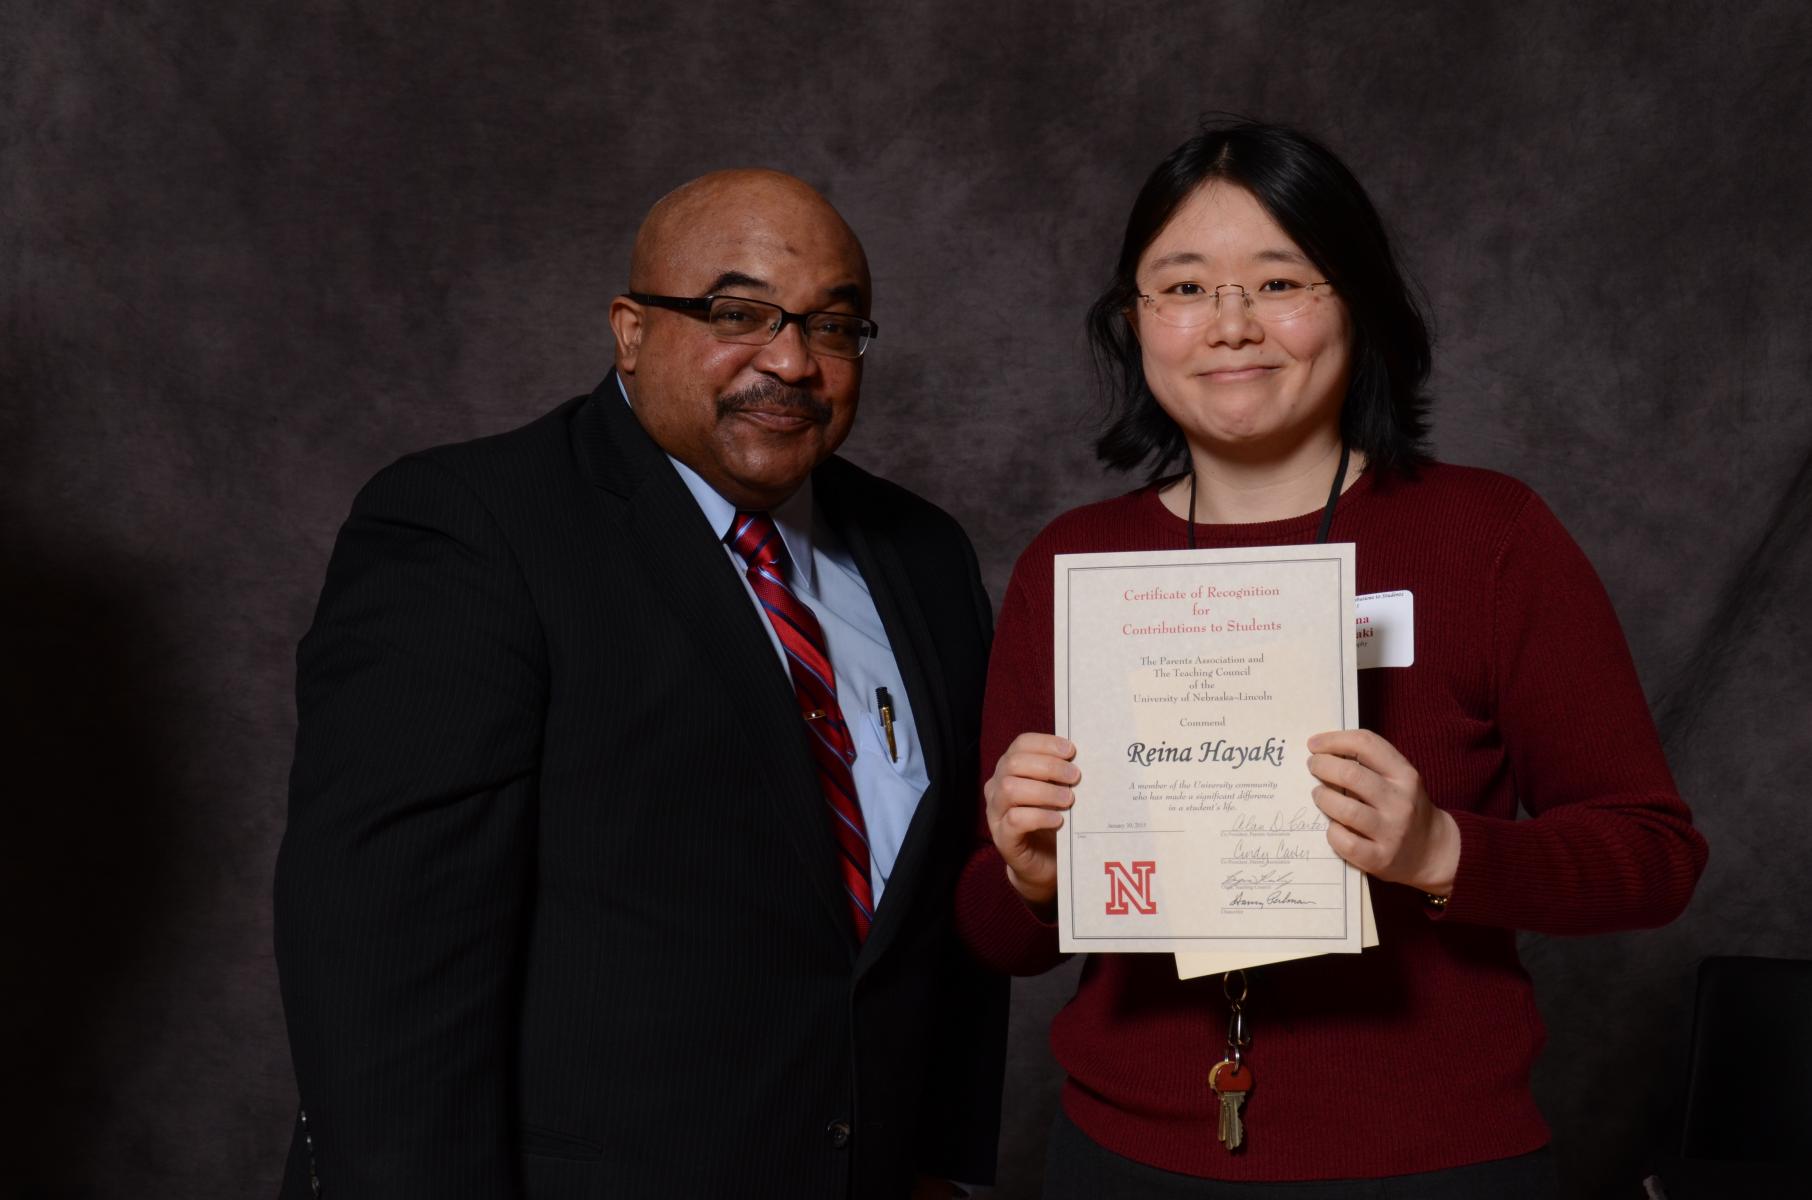 Reina Hayaki receiving her award at the 2015 UNL Parents Recognition Ceremony